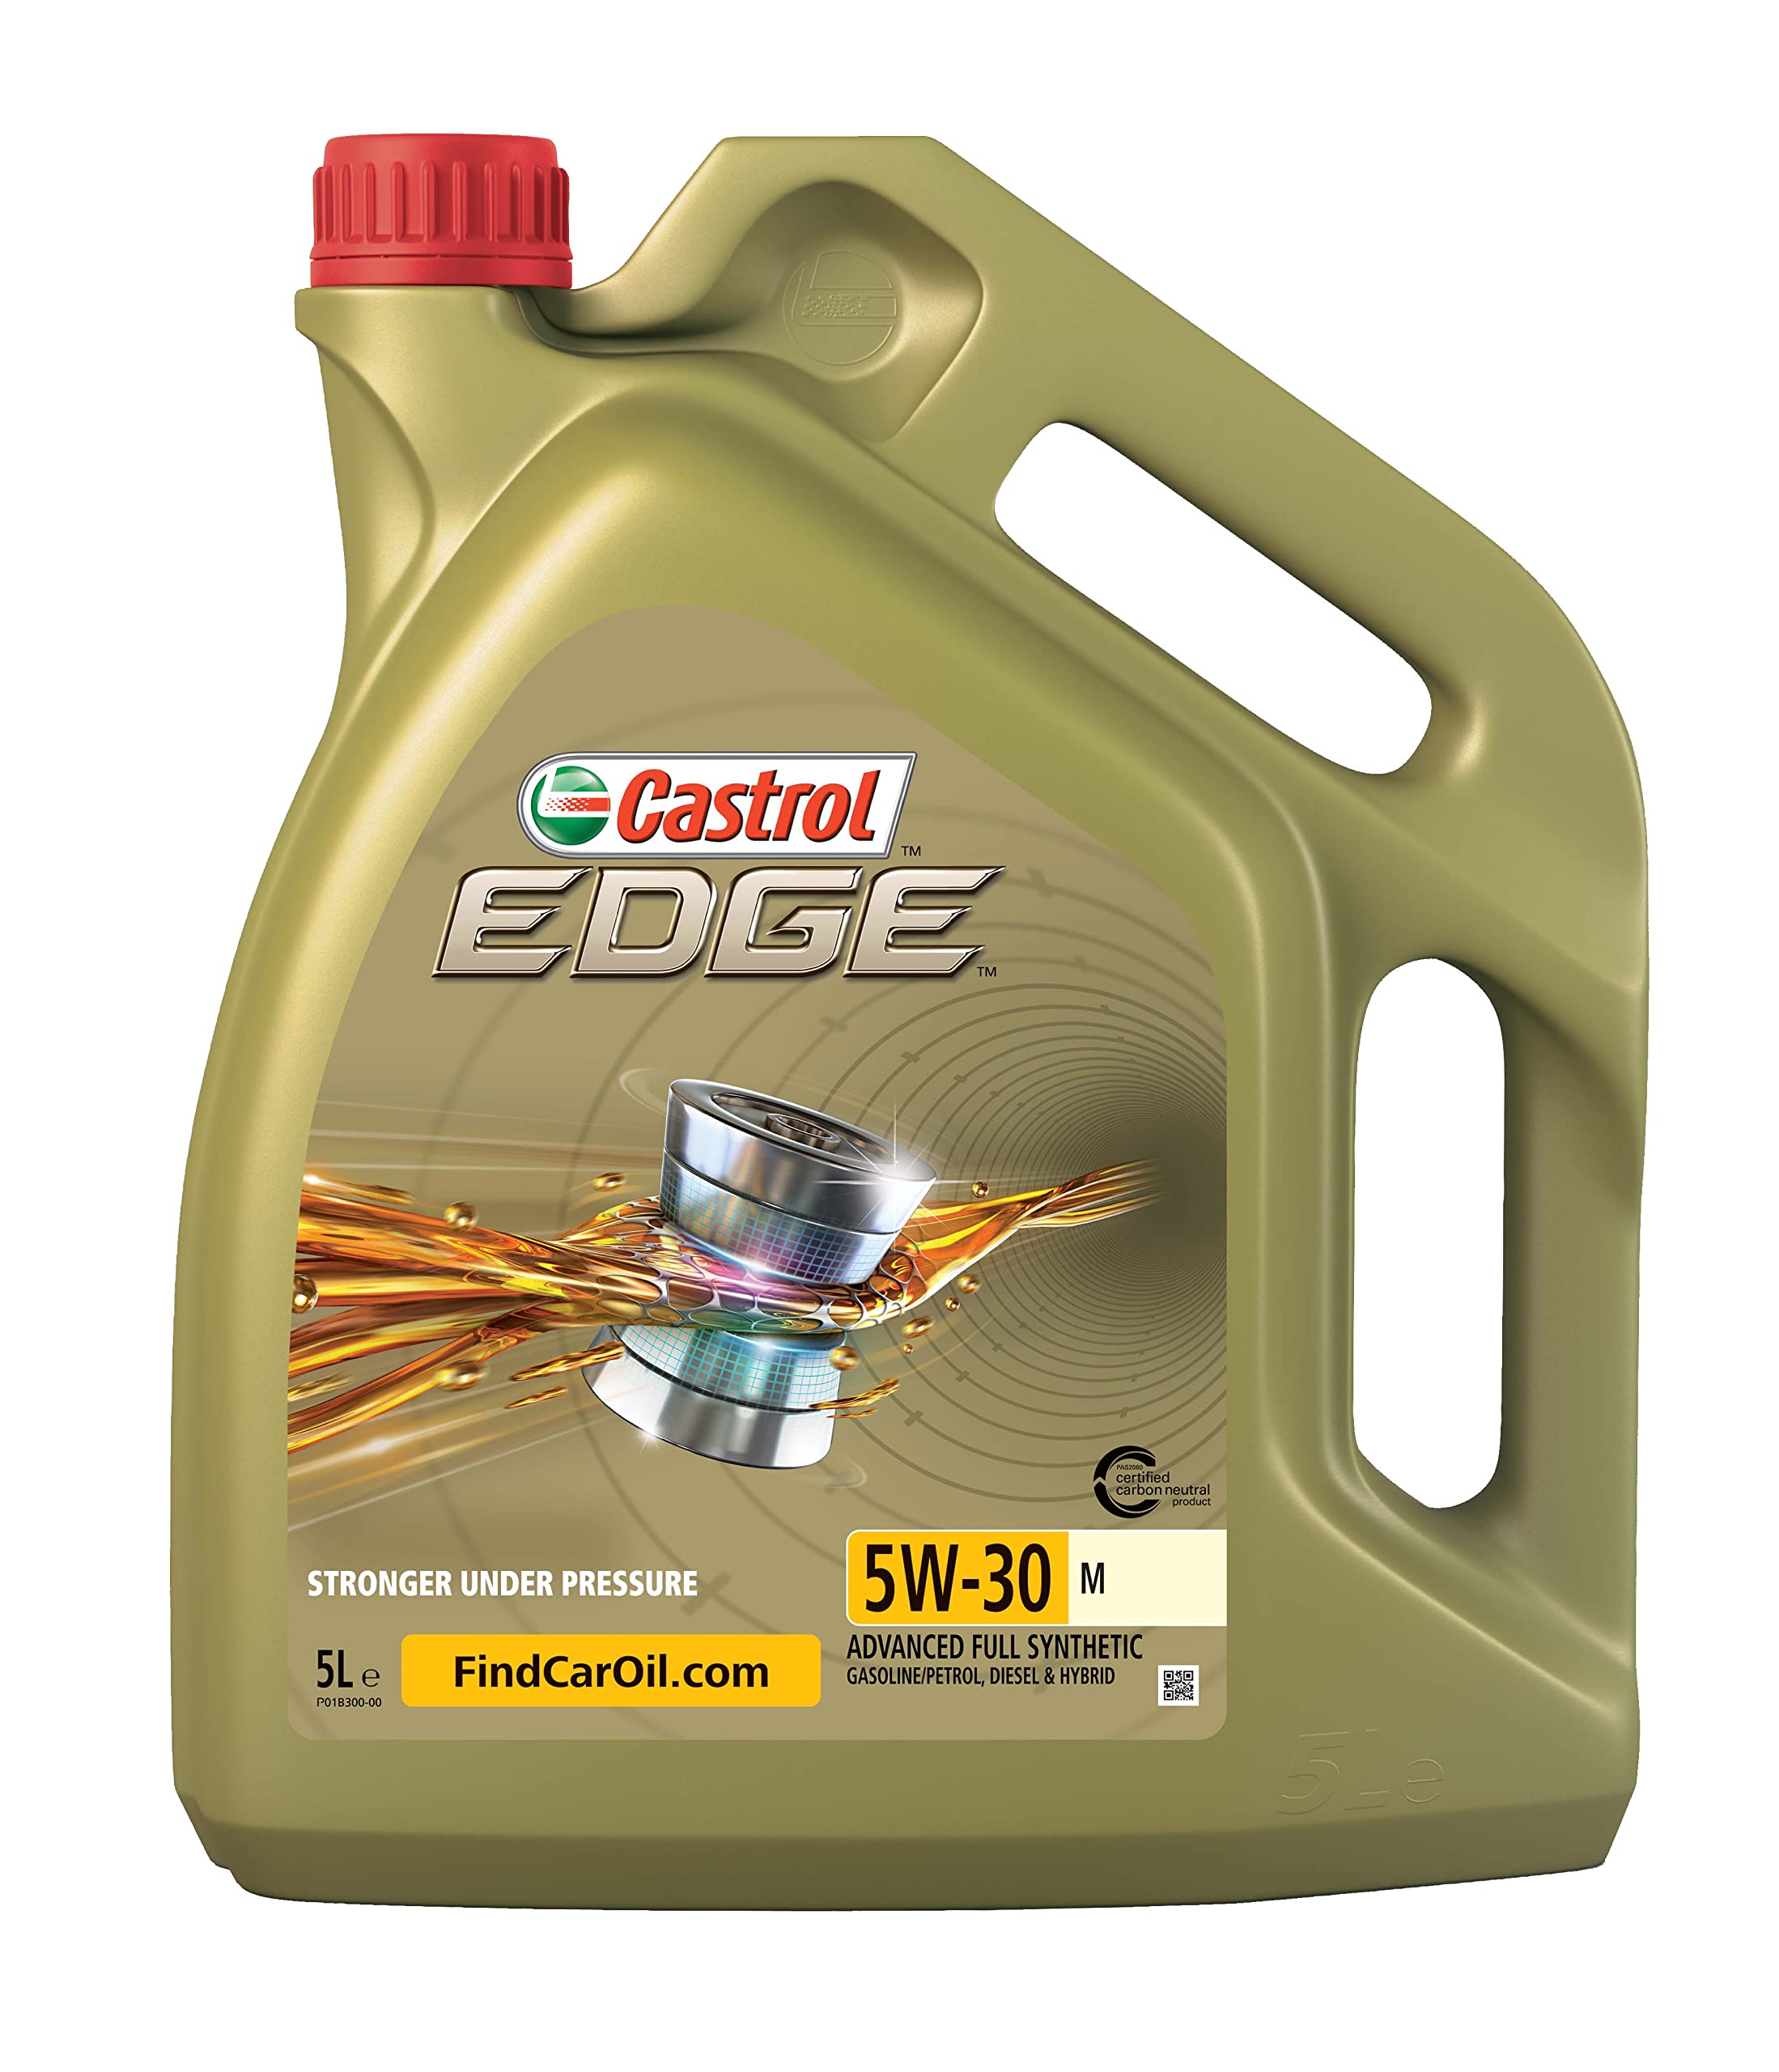 Castrol Edge 5W-30 M 5-Liter